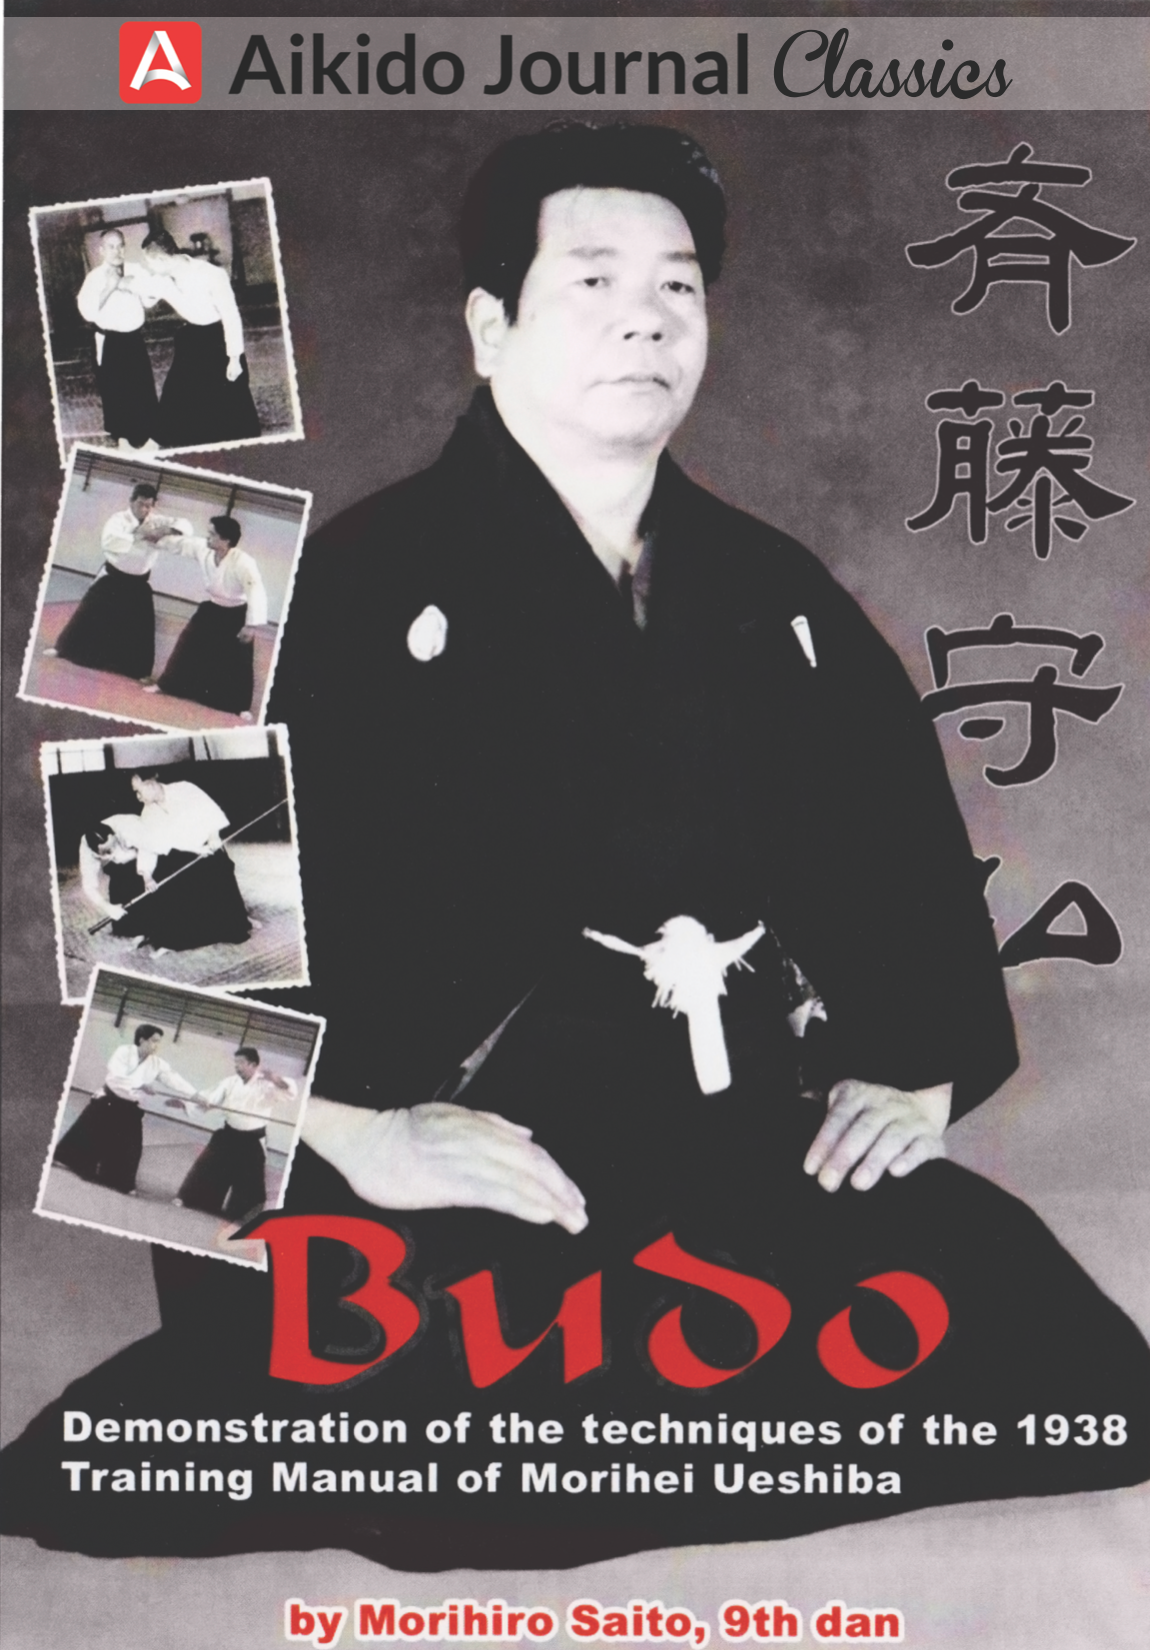 Budo DVD by Morihiro Saito